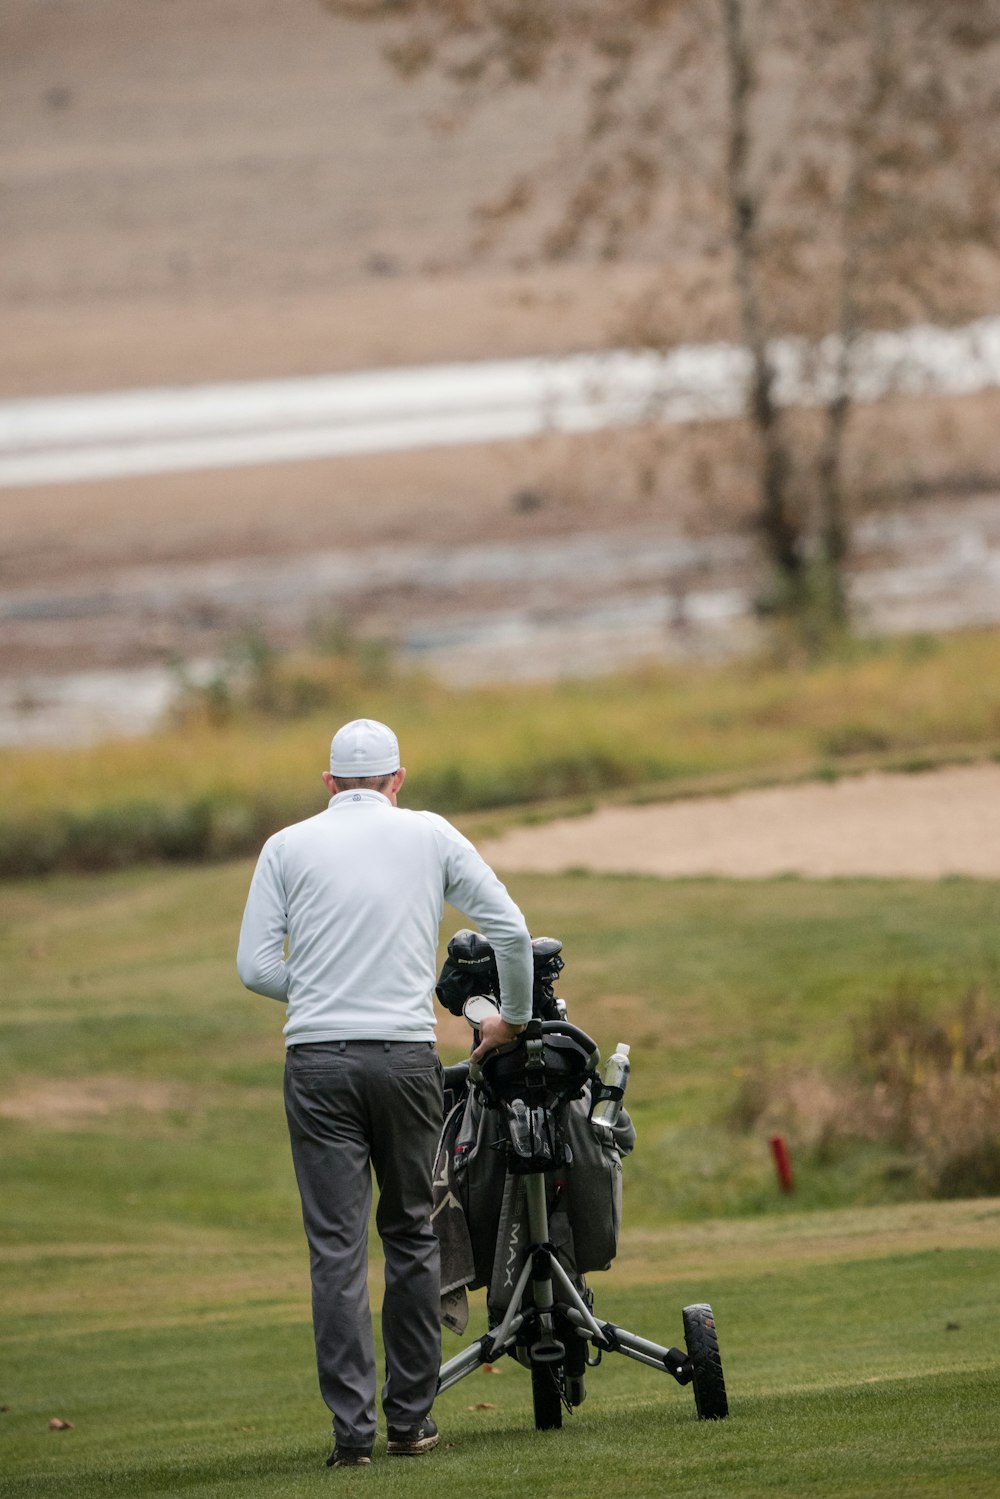 a man with a golf bag on a golf course